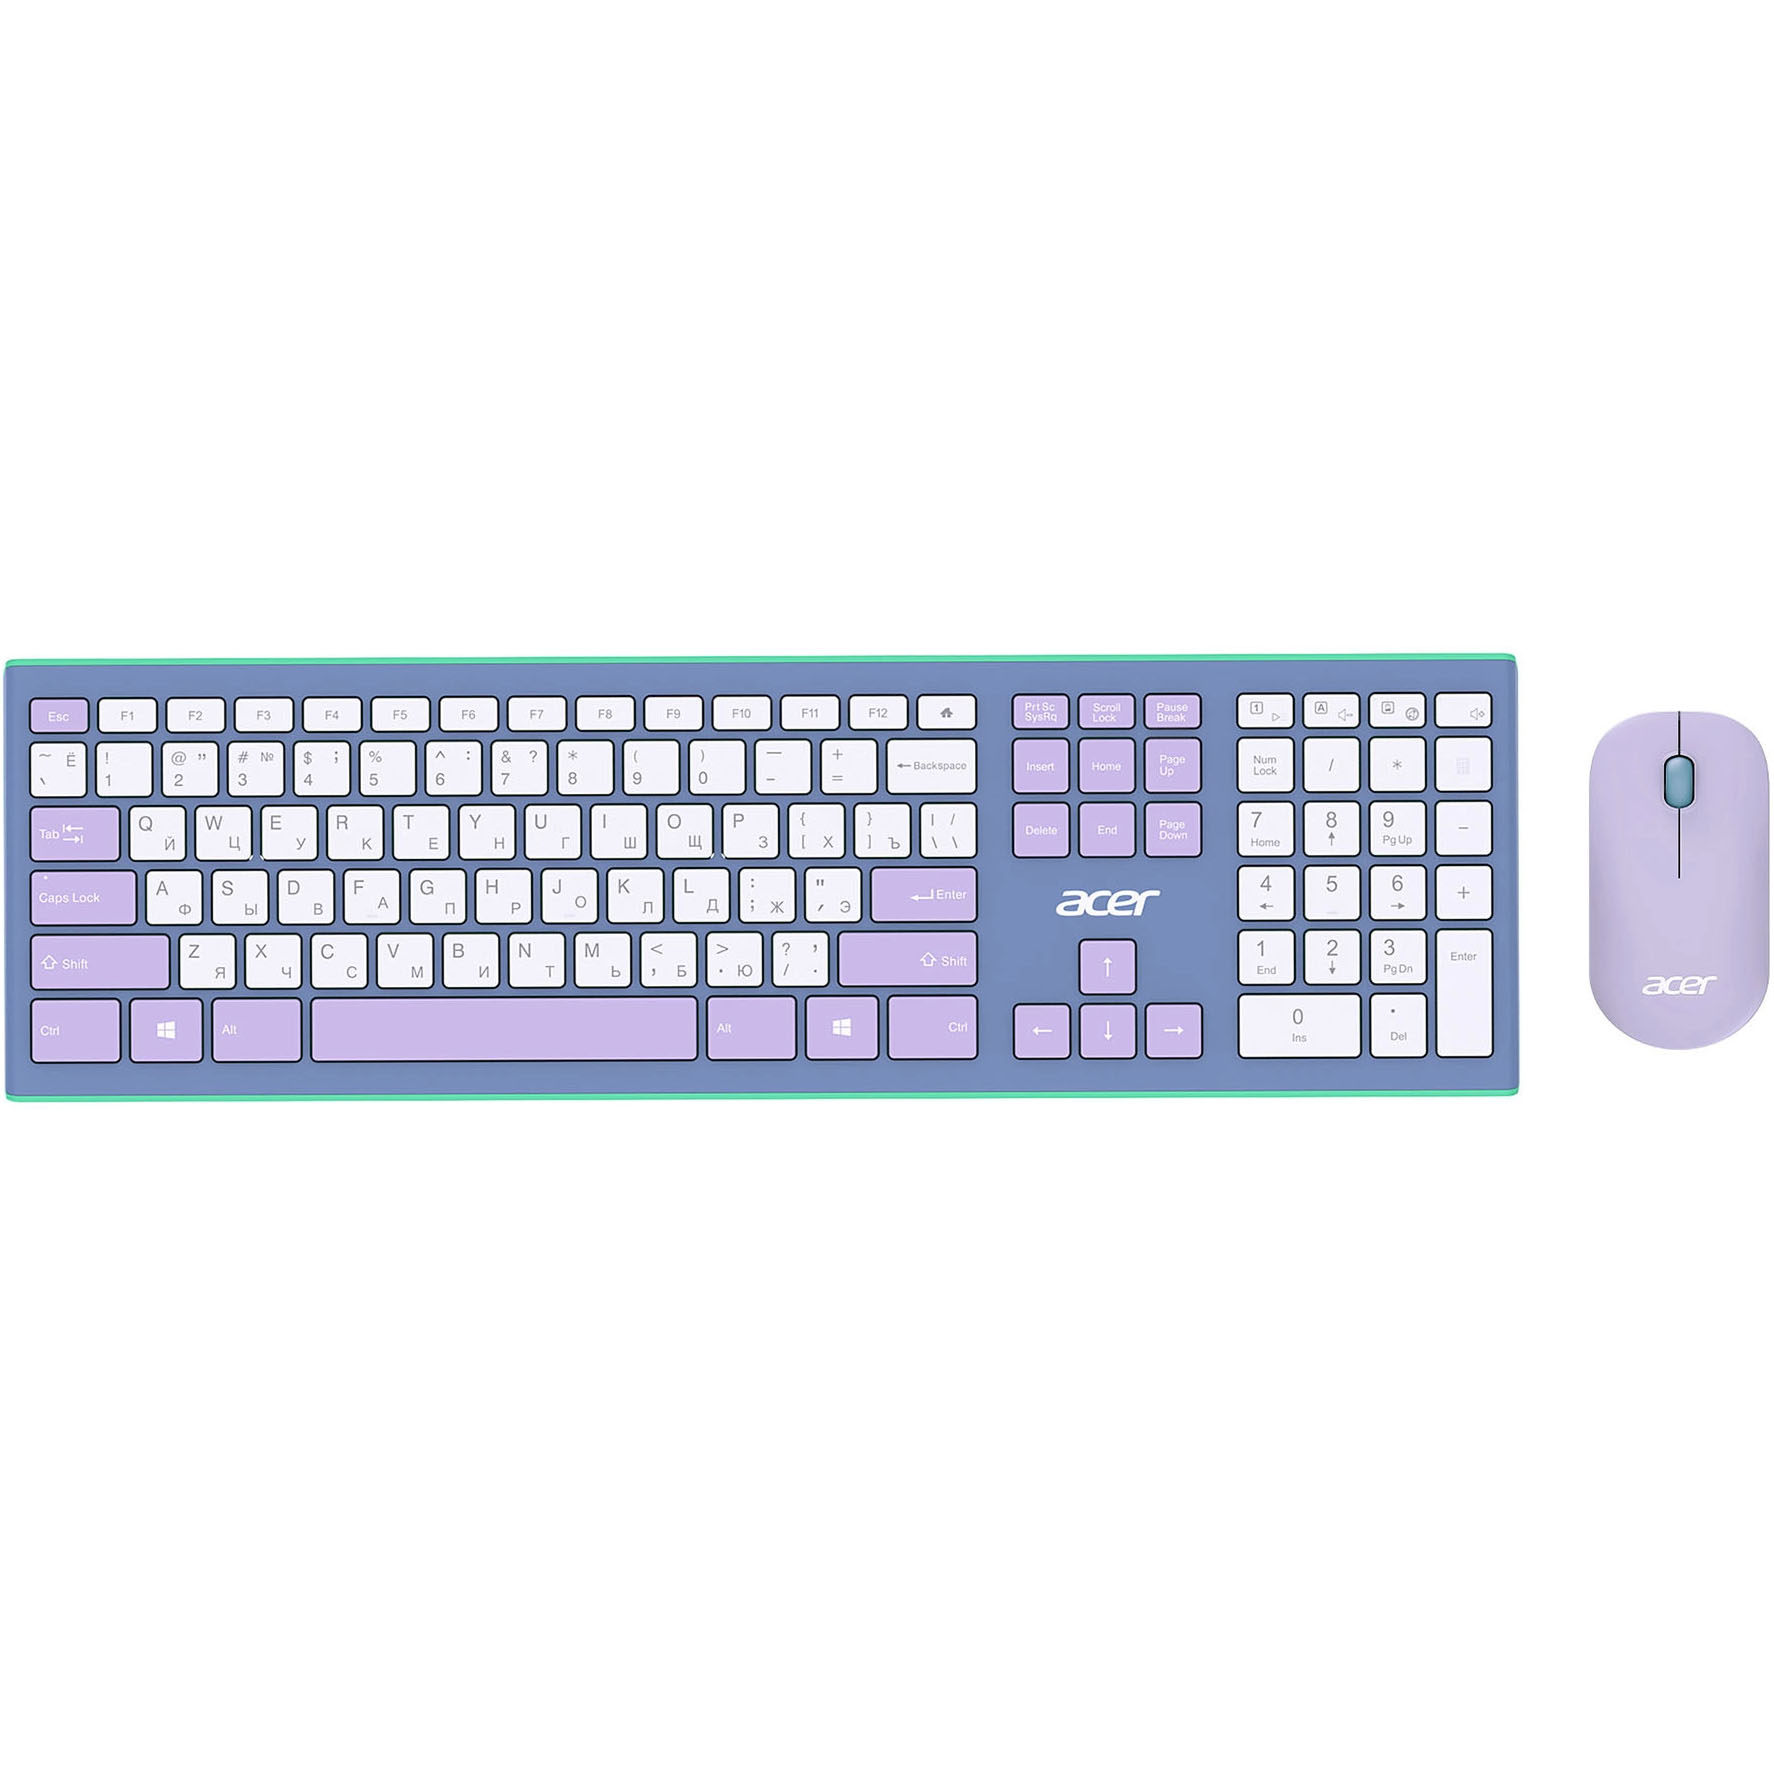 Комплект клавиатуры и мыши Acer OCC200 зеленый, фиолетовый клавиатура мышь acer occ200 белый желтый zl accee 002